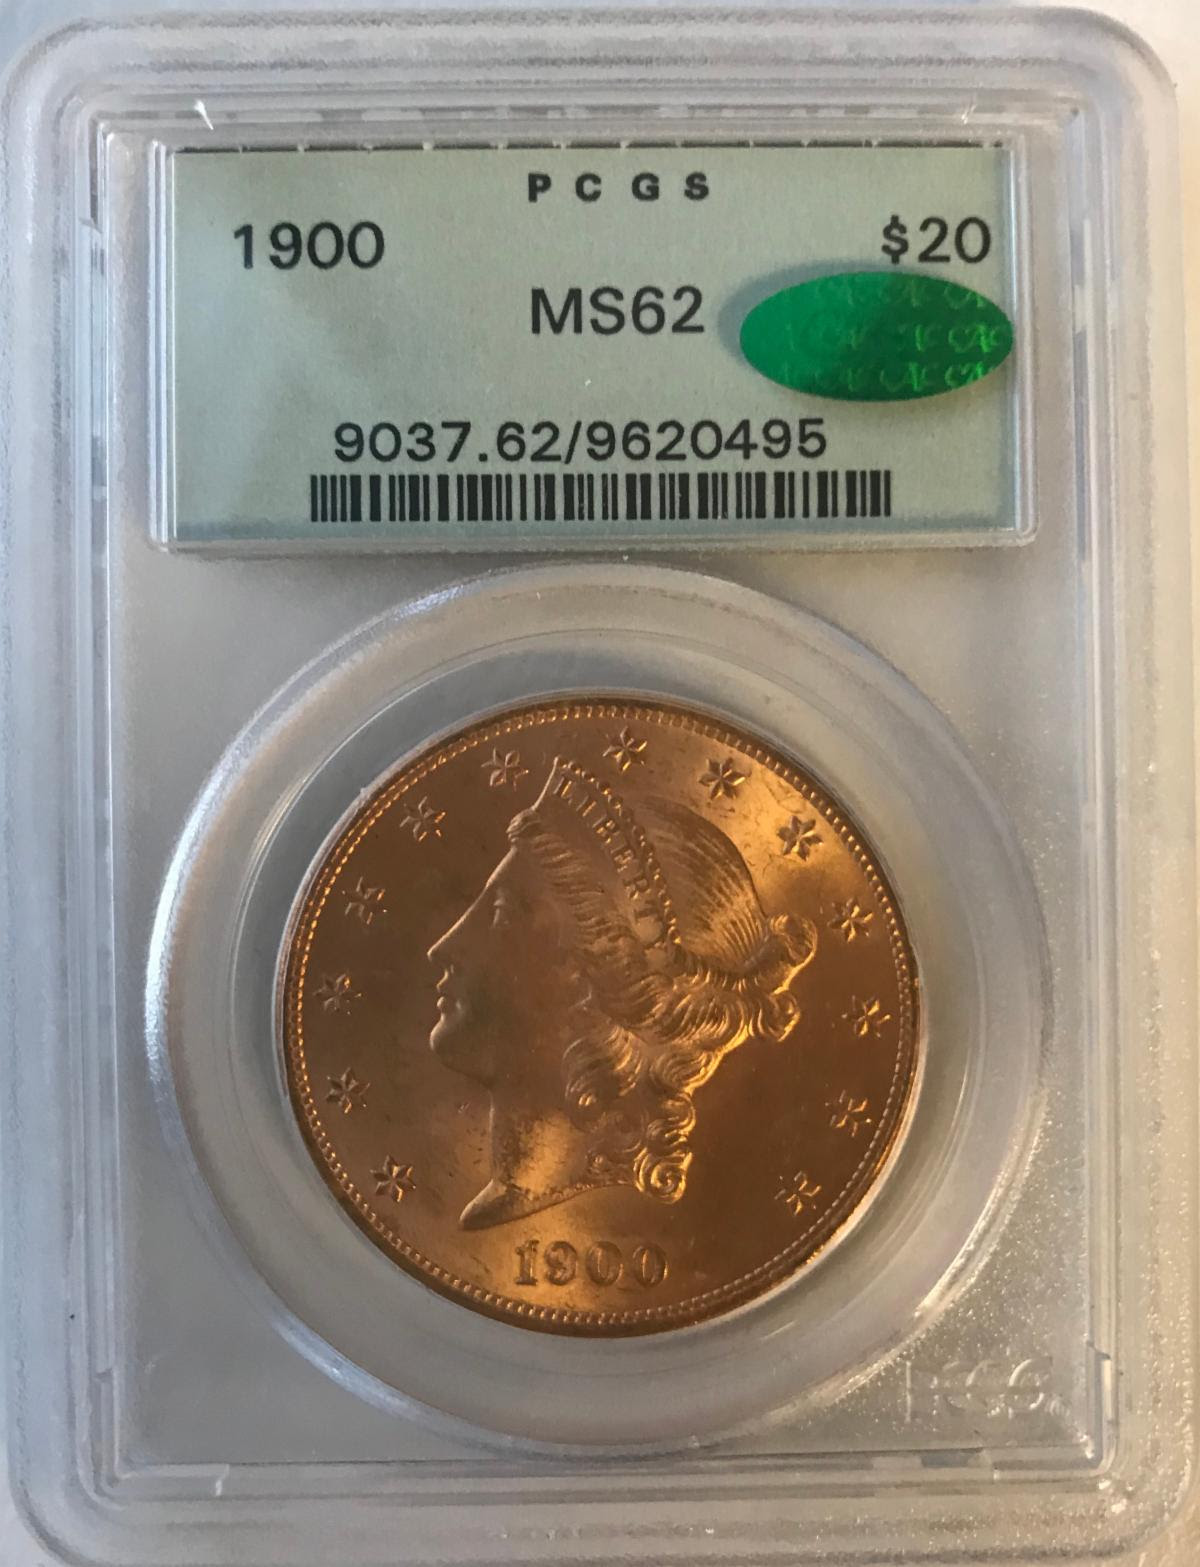 1900 $20 gold coin, image courtesy Numismatic Crime Information Center, Doug Davis